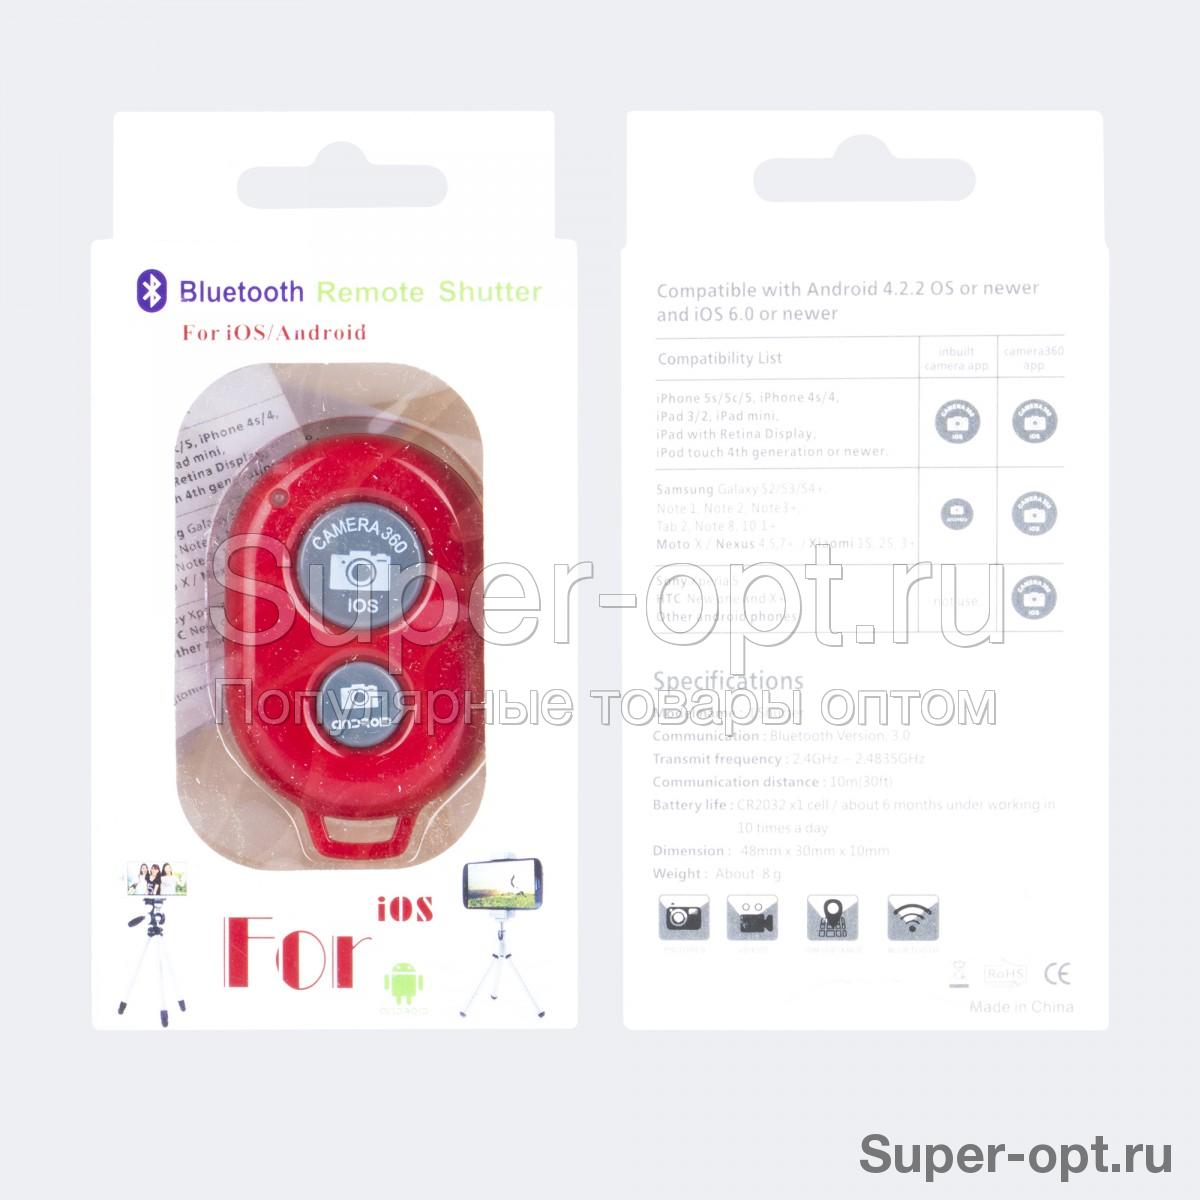 Bluetooth Remote Shutter – Беспроводной фотопульт для iOS/Android